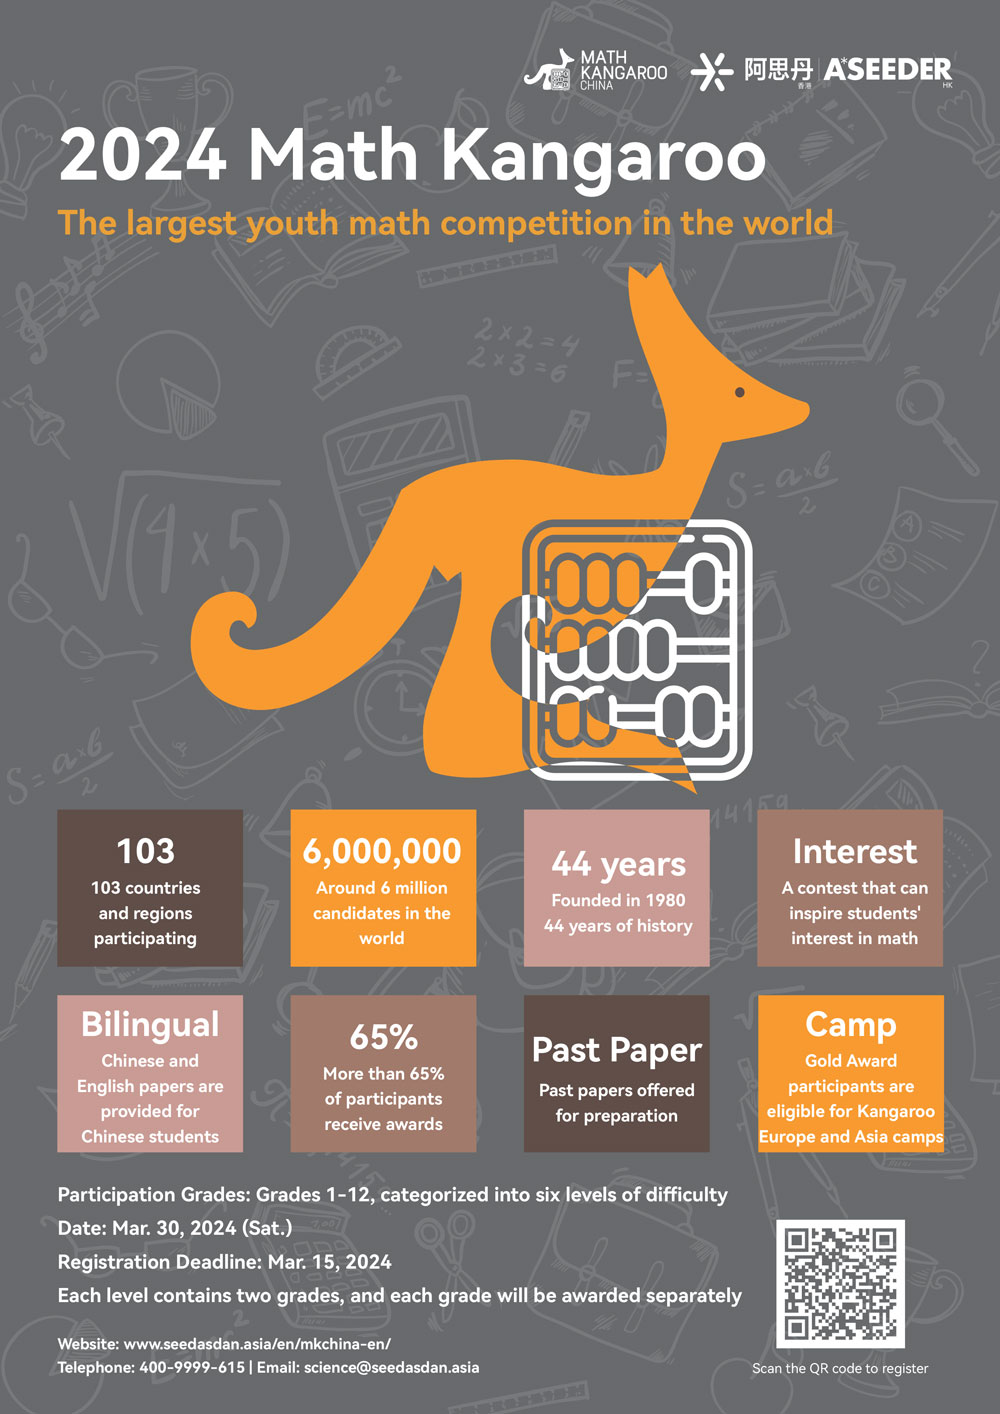 Math Kangaroo 2024 Igniting Mathematical Excellence in Young Minds - Math Kangaroo 2024 Igniting Mathematical Excellence in Young Minds